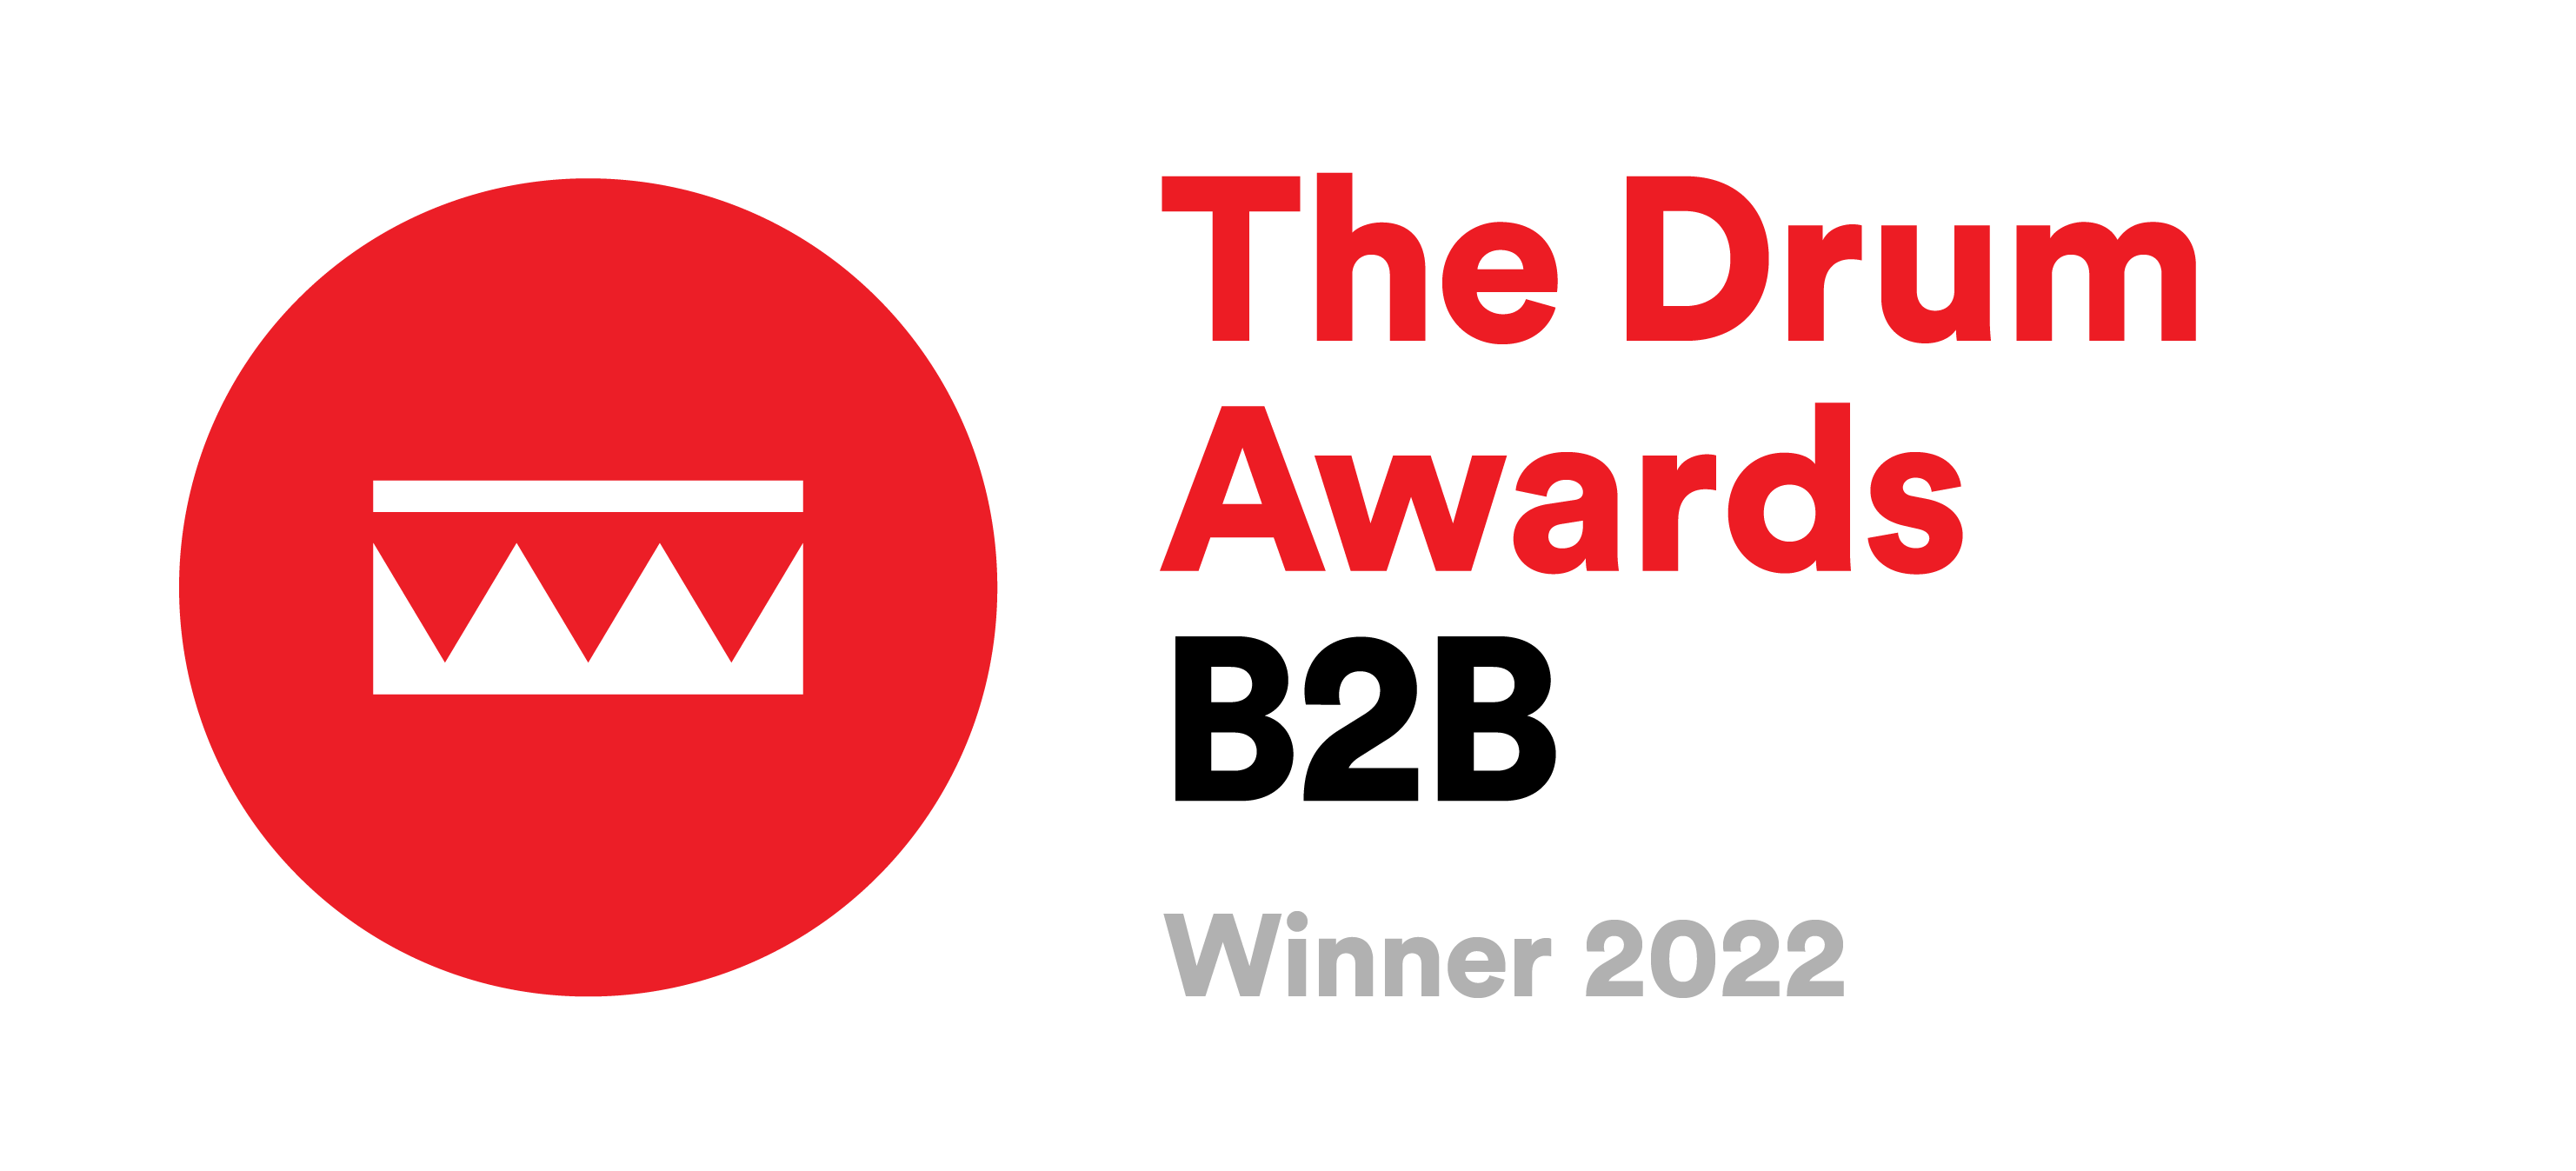 The Drum B2B Awards 2022